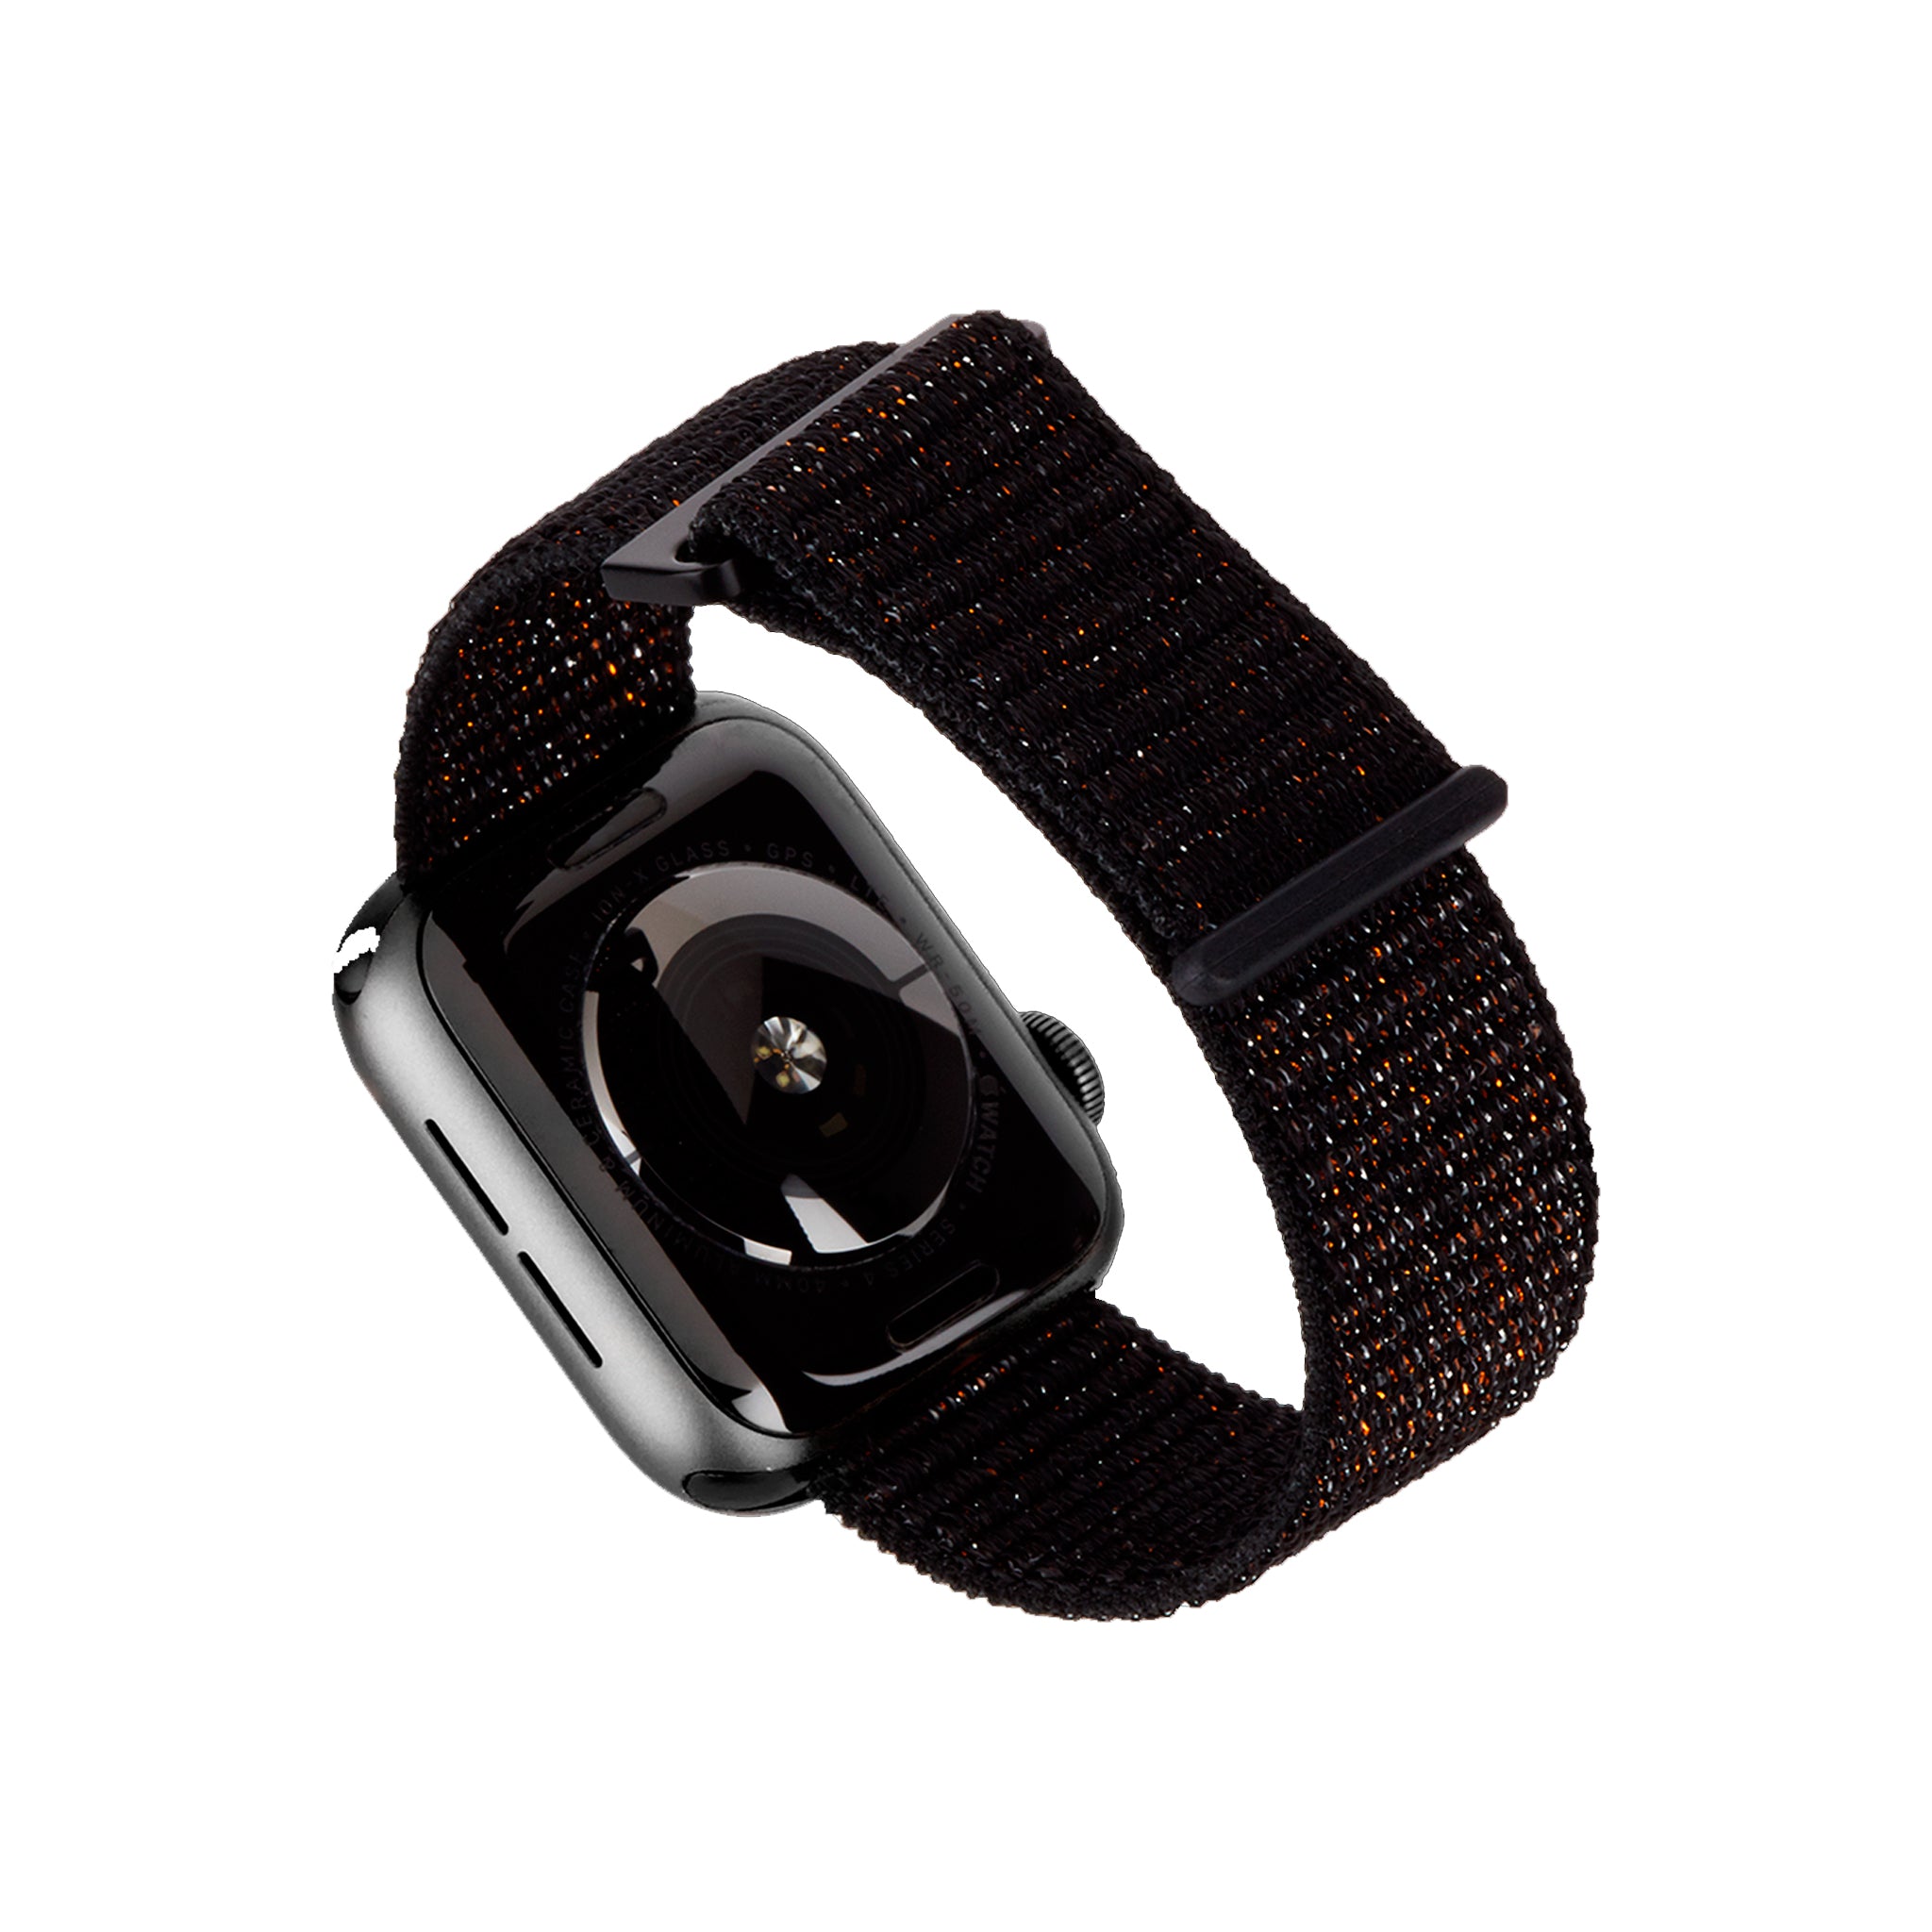 Case-mate - Nylon Watchband For Apple Watch 38mm / 40mm - Mixed Metallic Black